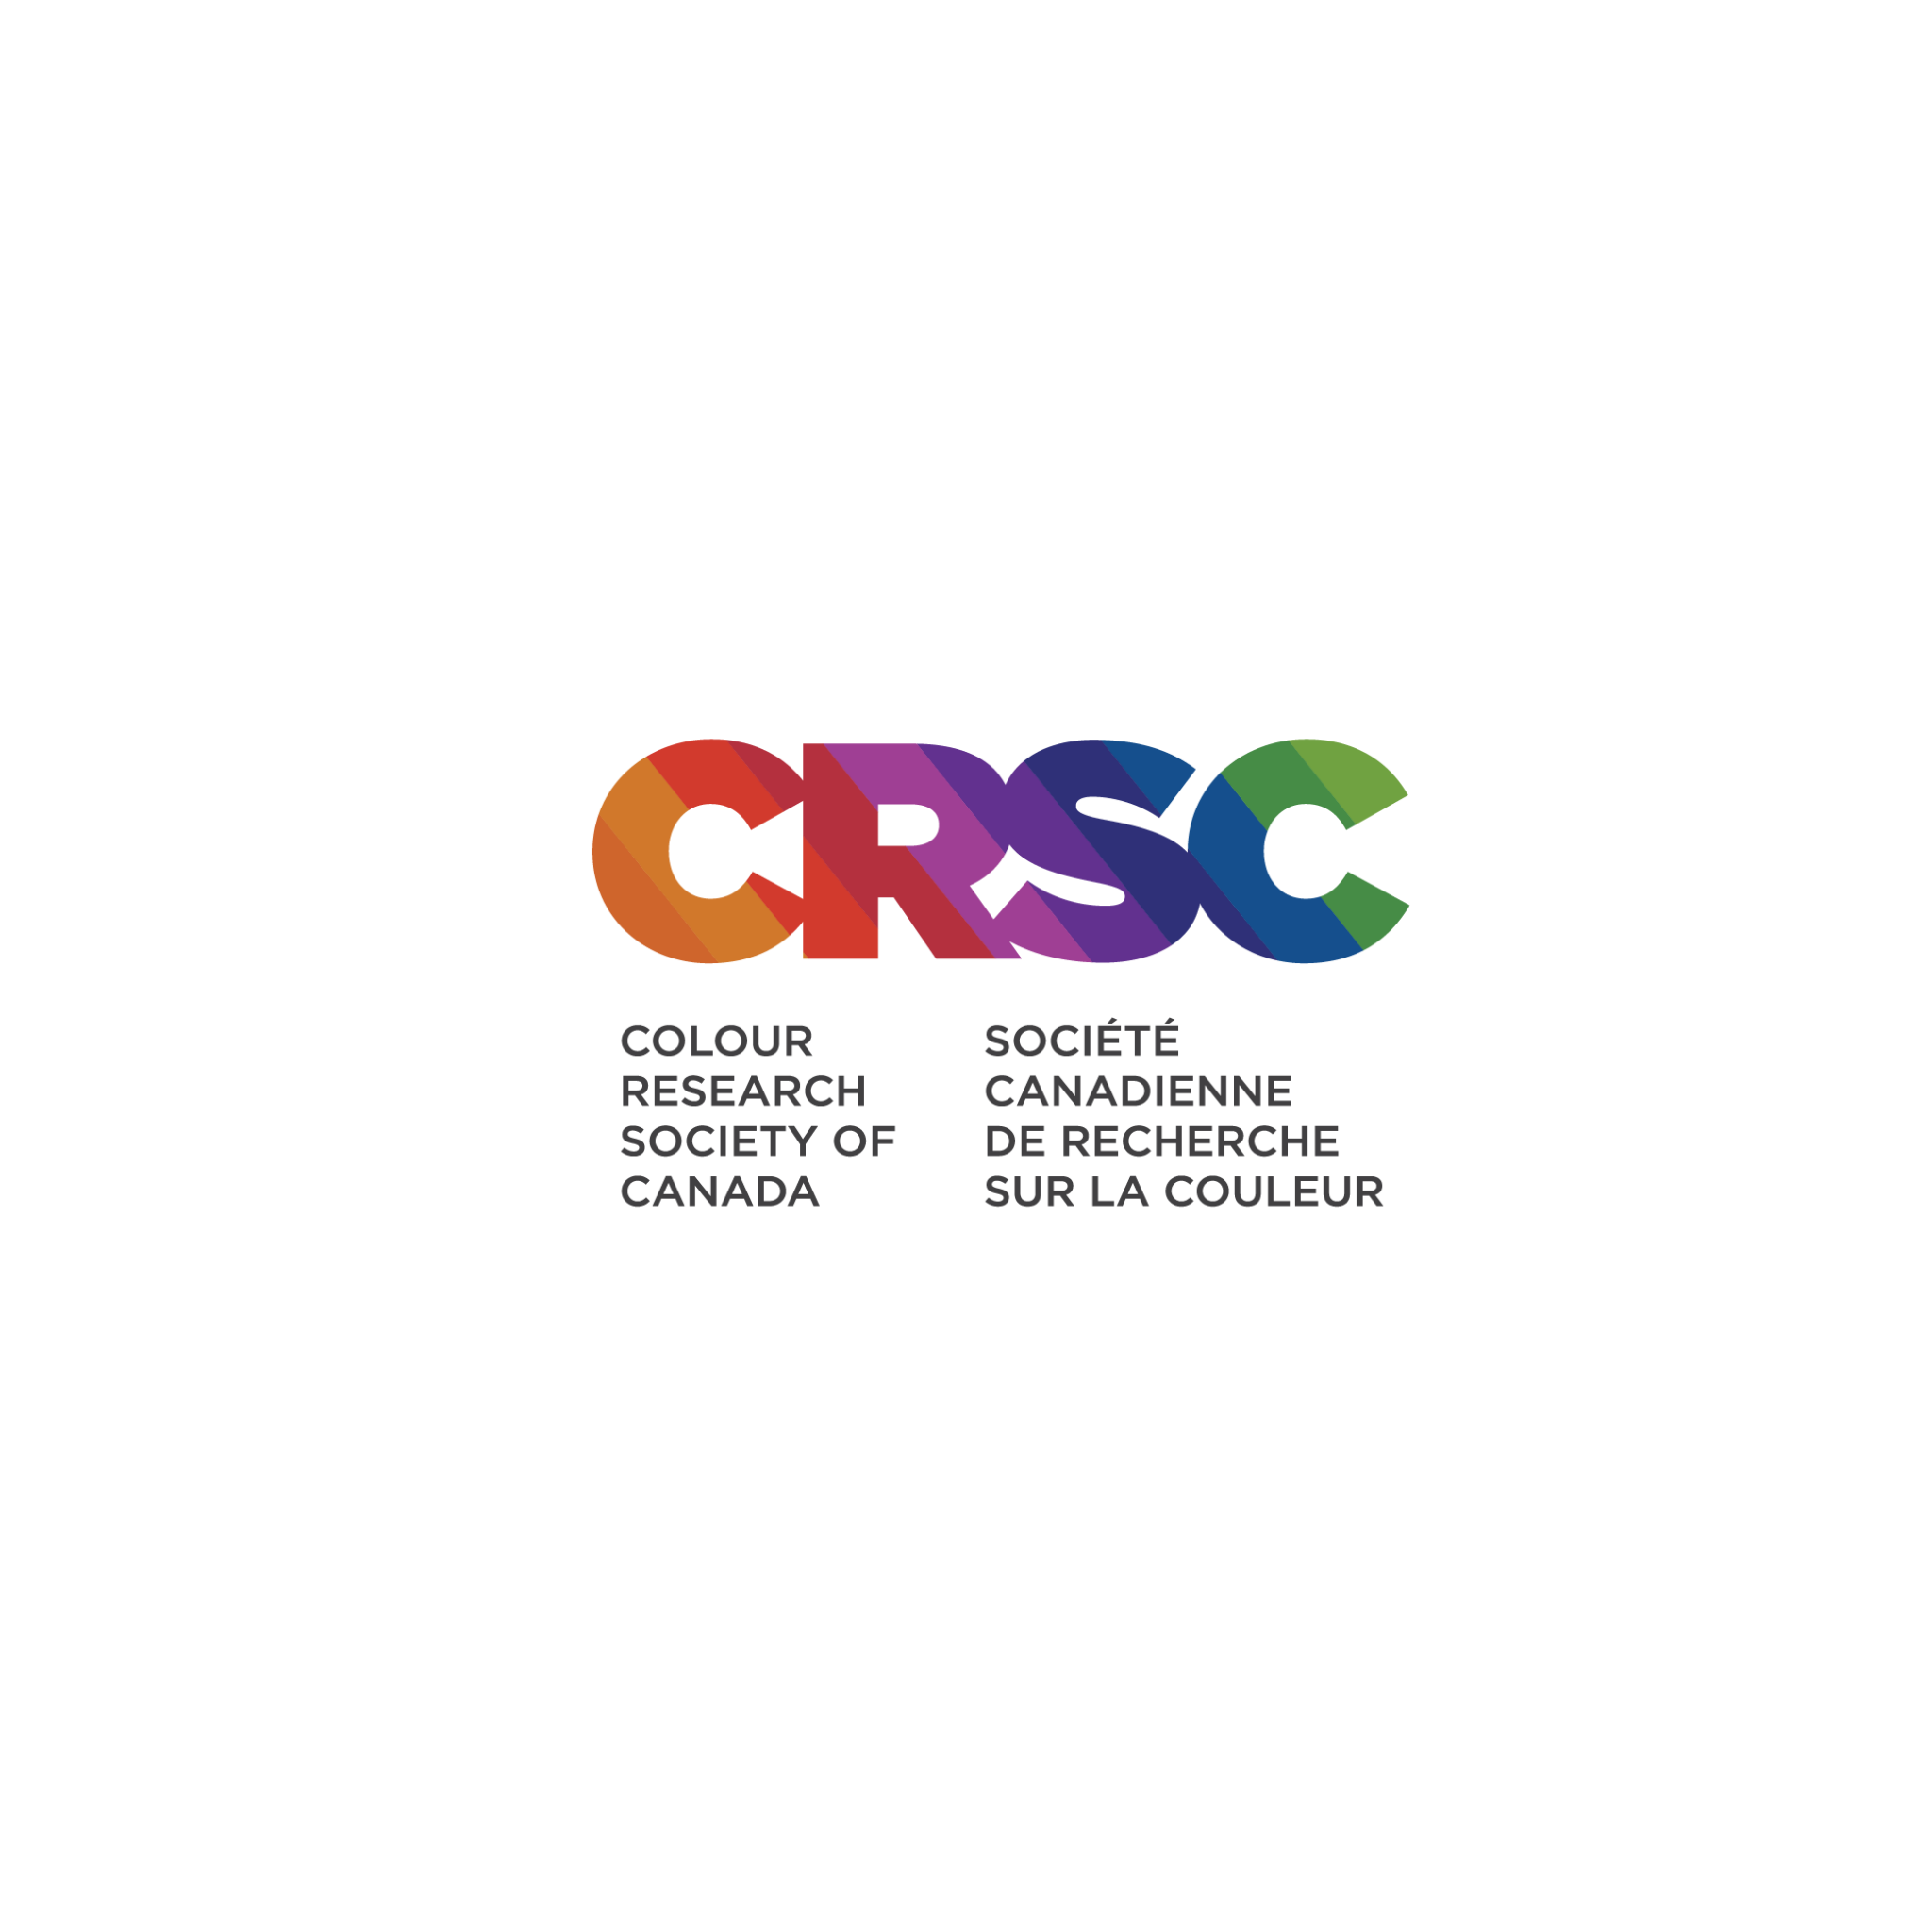 CRSC logo